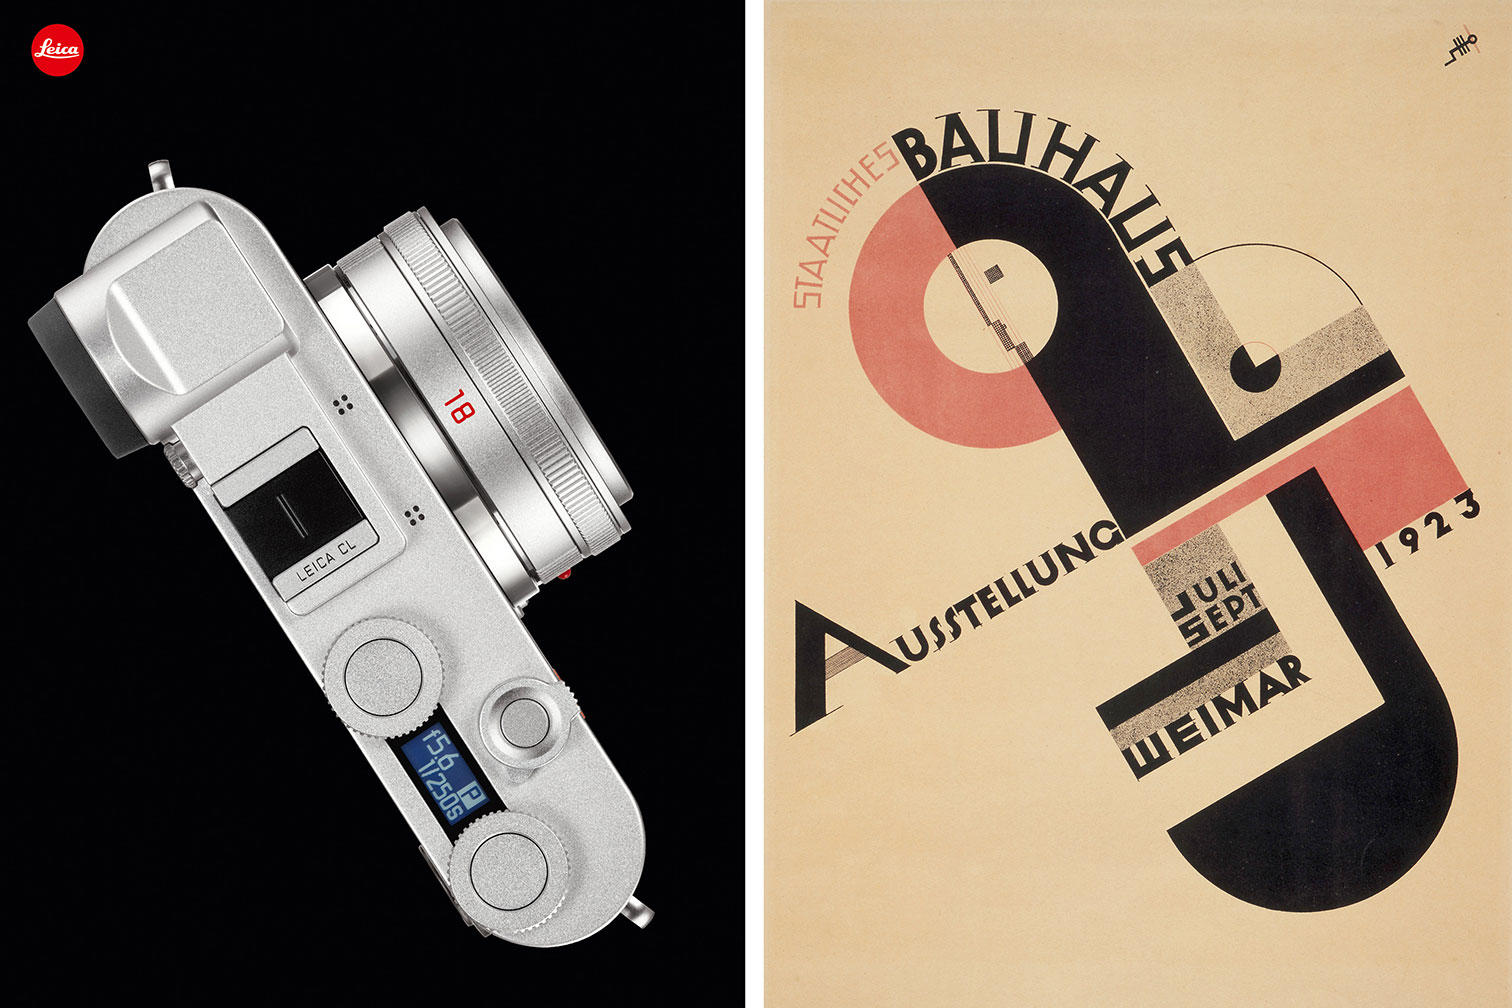 Leica-CL-100-Jahre-Bauhaus-limited-edition-camera3.jpg